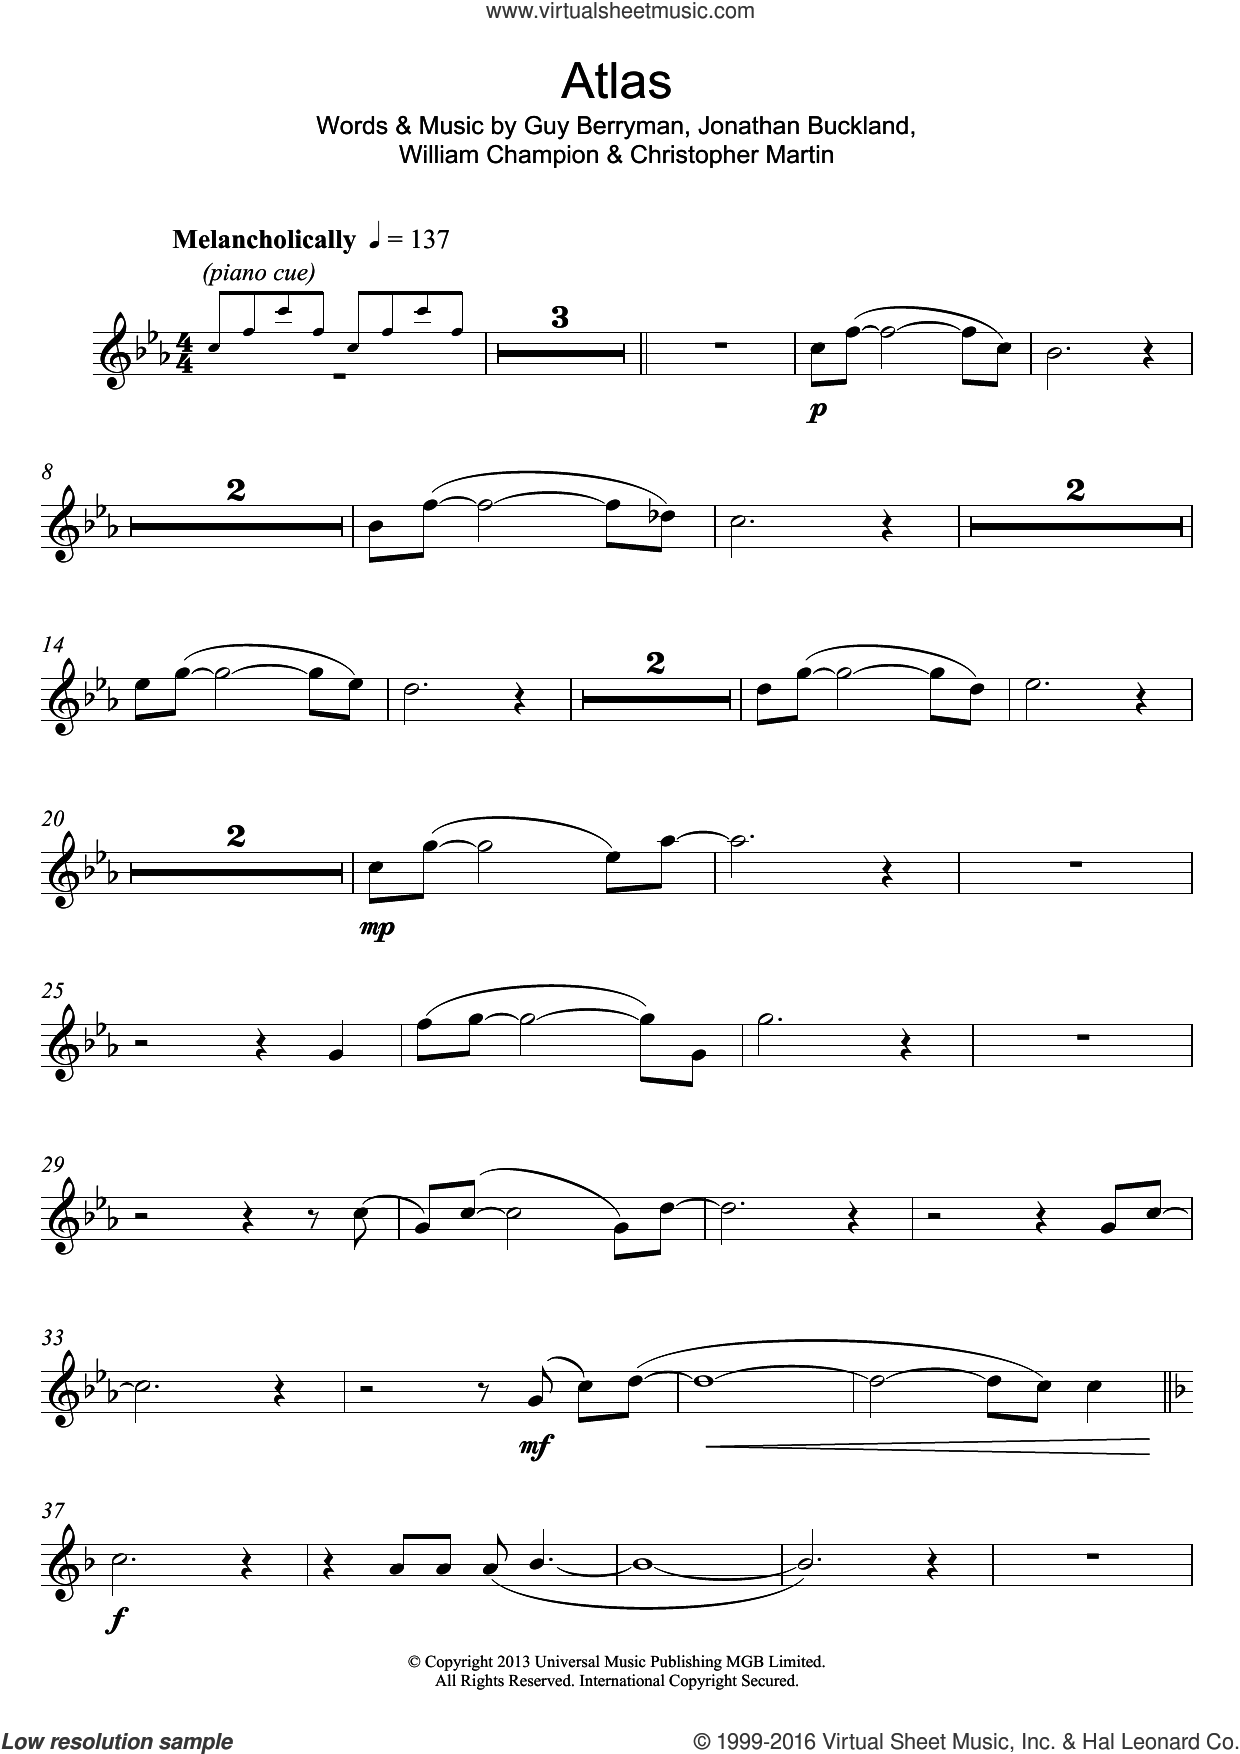 Coldplay - Atlas sheet music for alto saxophone solo [PDF]